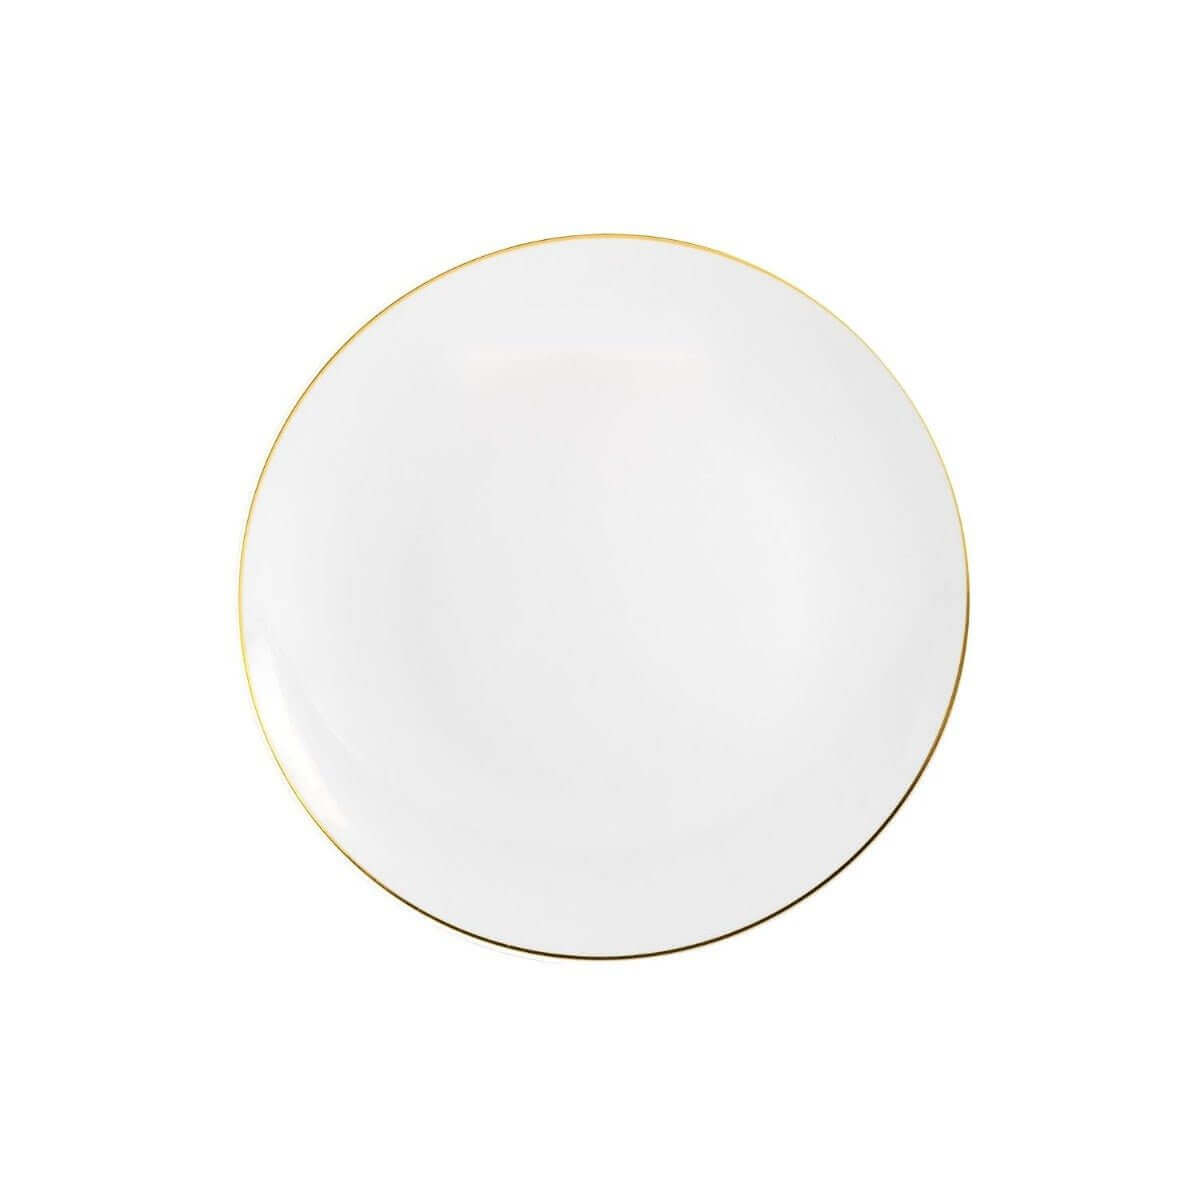 8" Classic Gold Design Plastic Plates (40 Count) - Yom Tov Settings